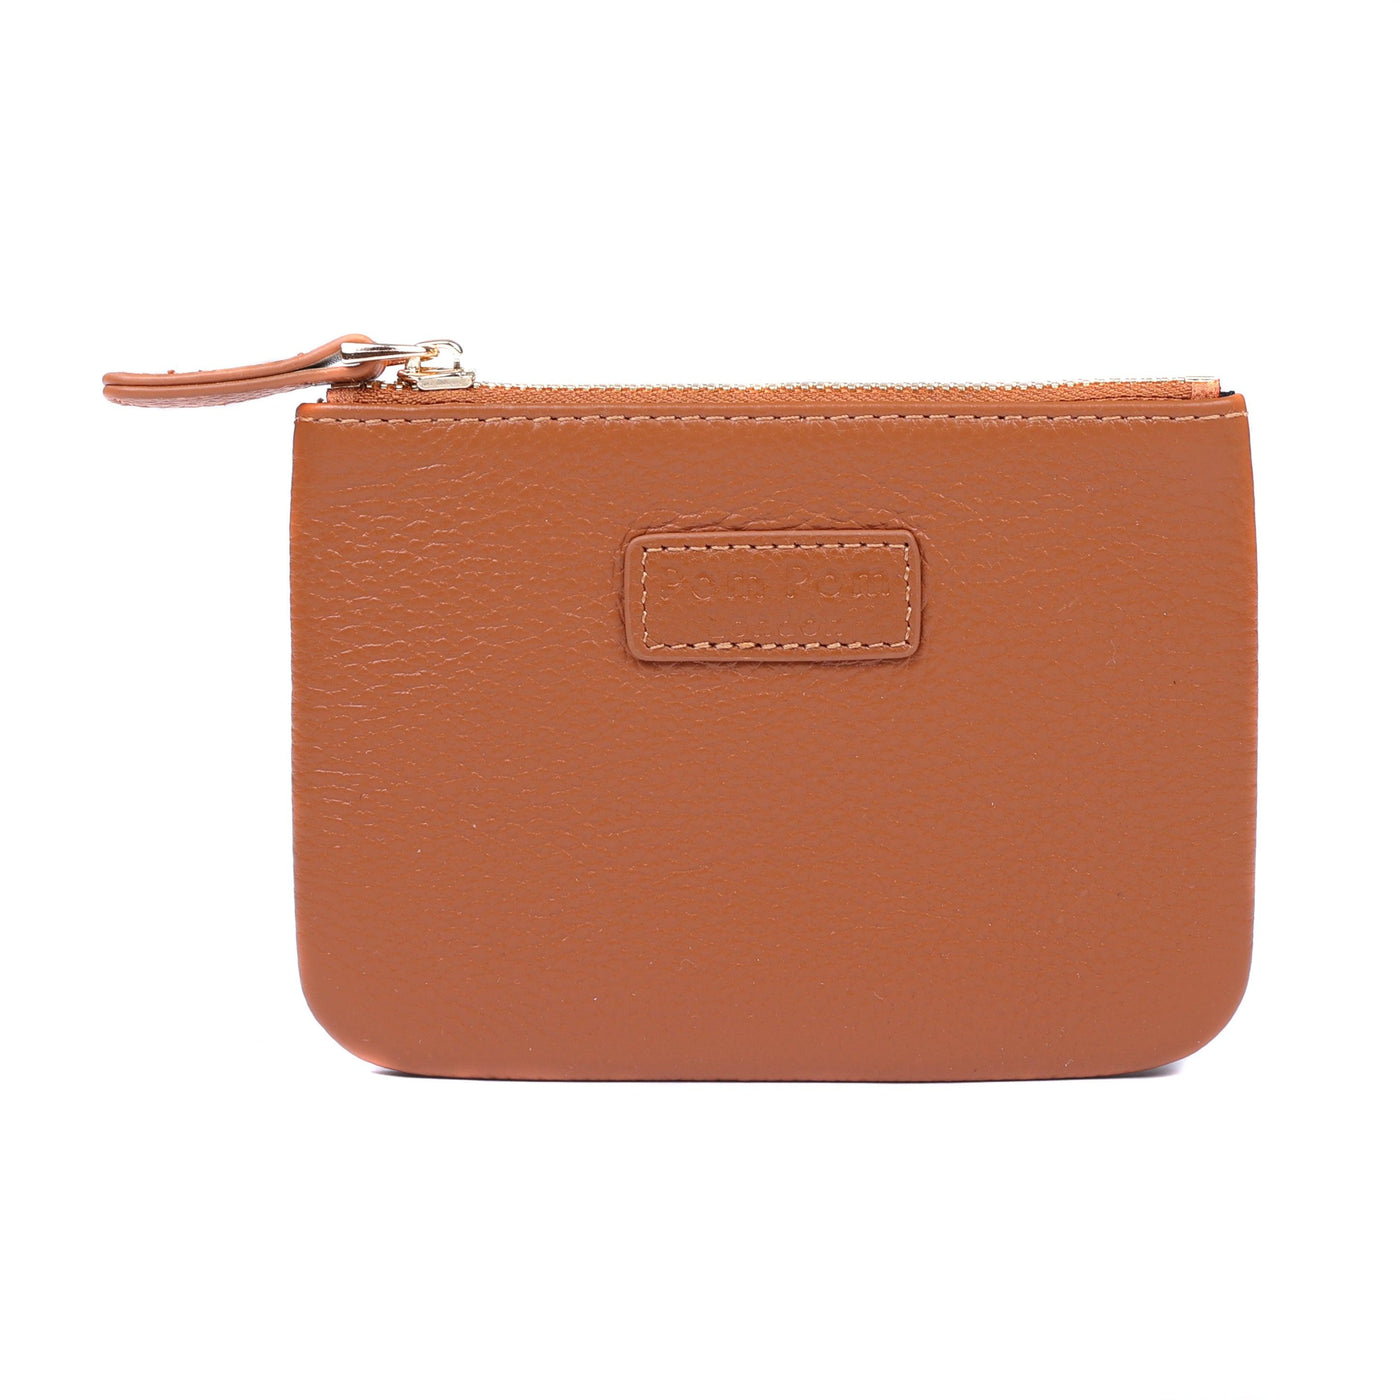 Dune London Light Brown Leather Coin Purse Bag Card holder Key Holder | eBay